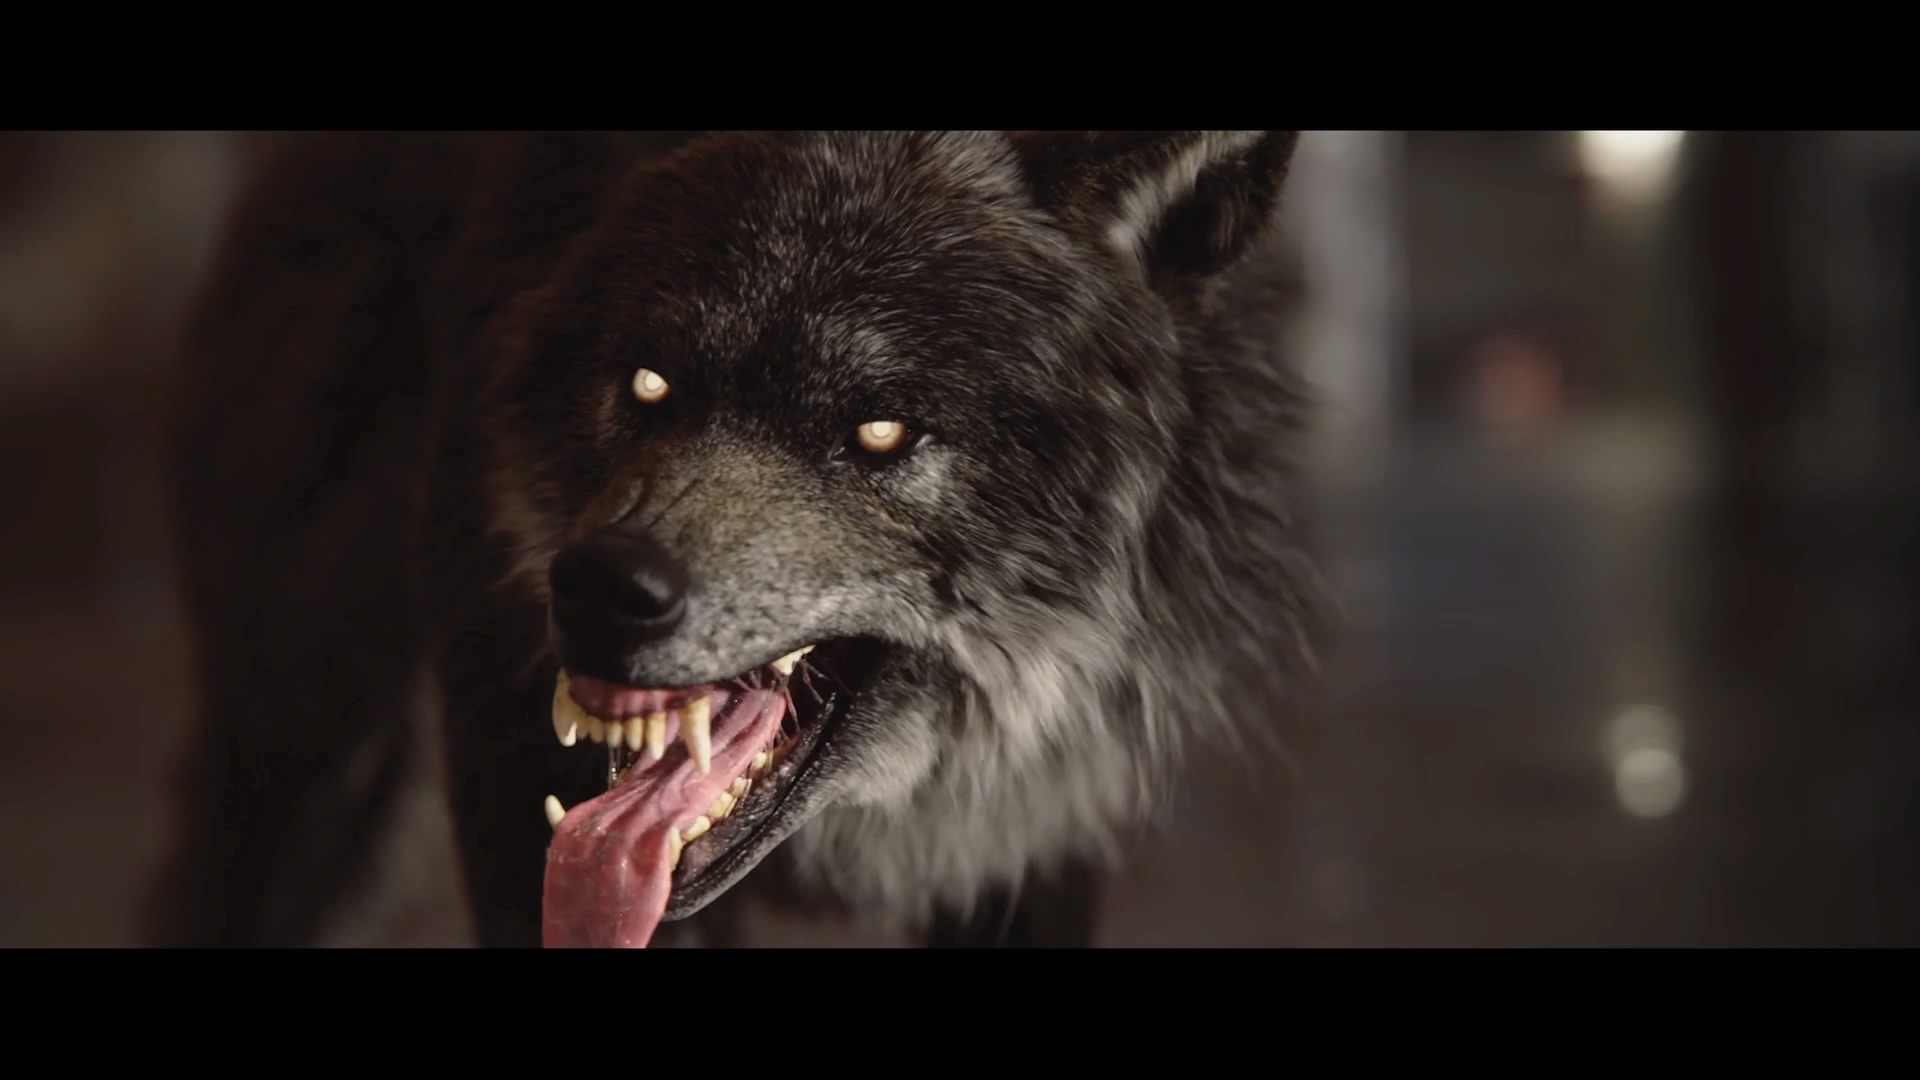 Werewolf The Apocalypse Earthblood 20210128161415 | PS4 | รีวิวเกม Werewolf The Apocalypse Earthblood เกมมนุษย์หมาป่าฉบับสายลับ